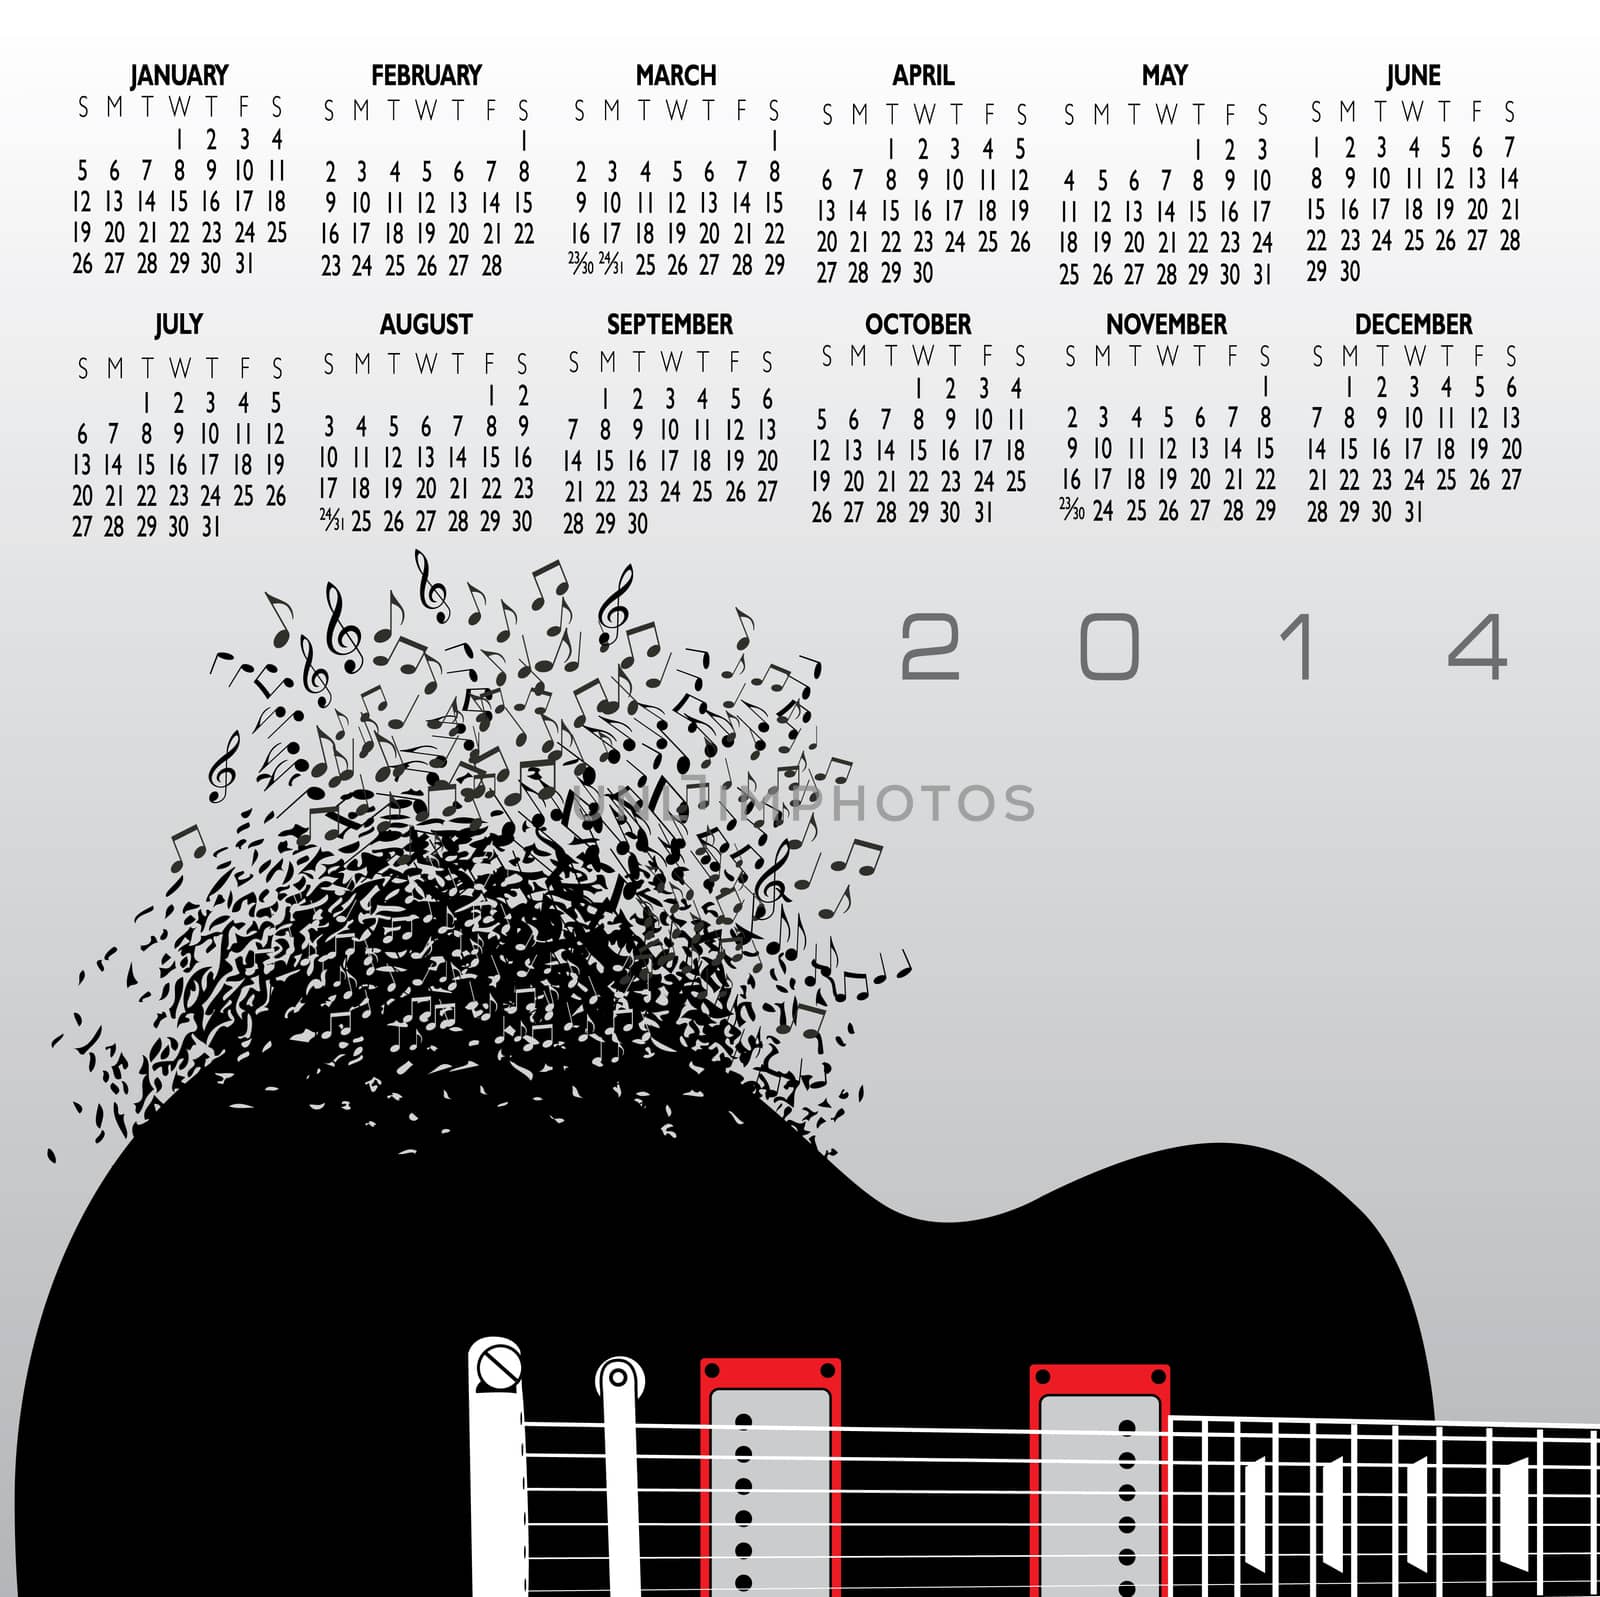 2014 Guitar Creative Calendar for Print or Web